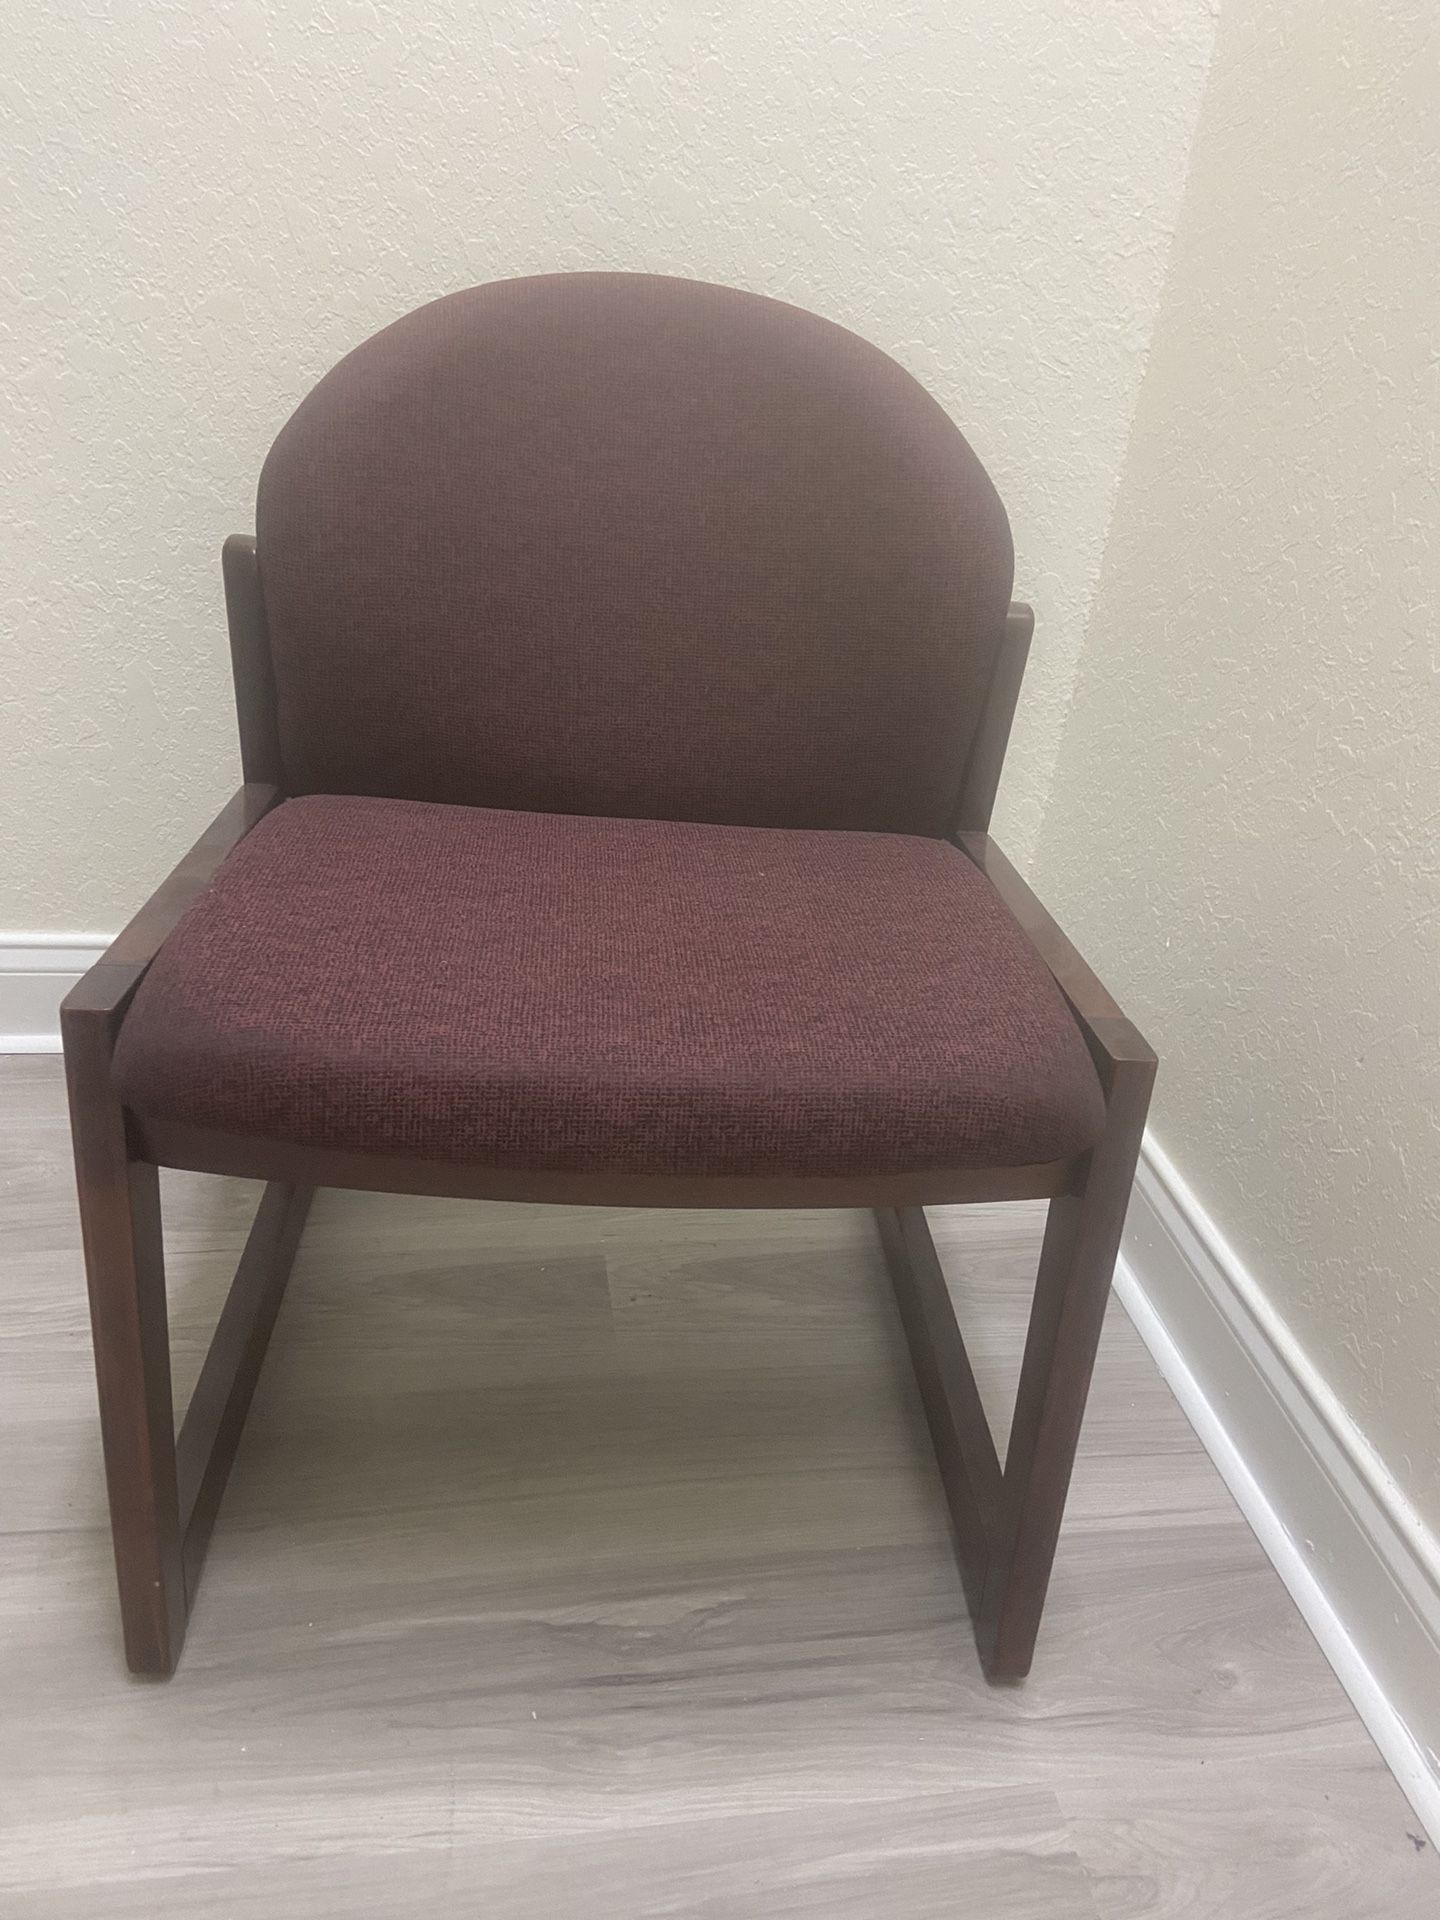 Waiting Room Chairs